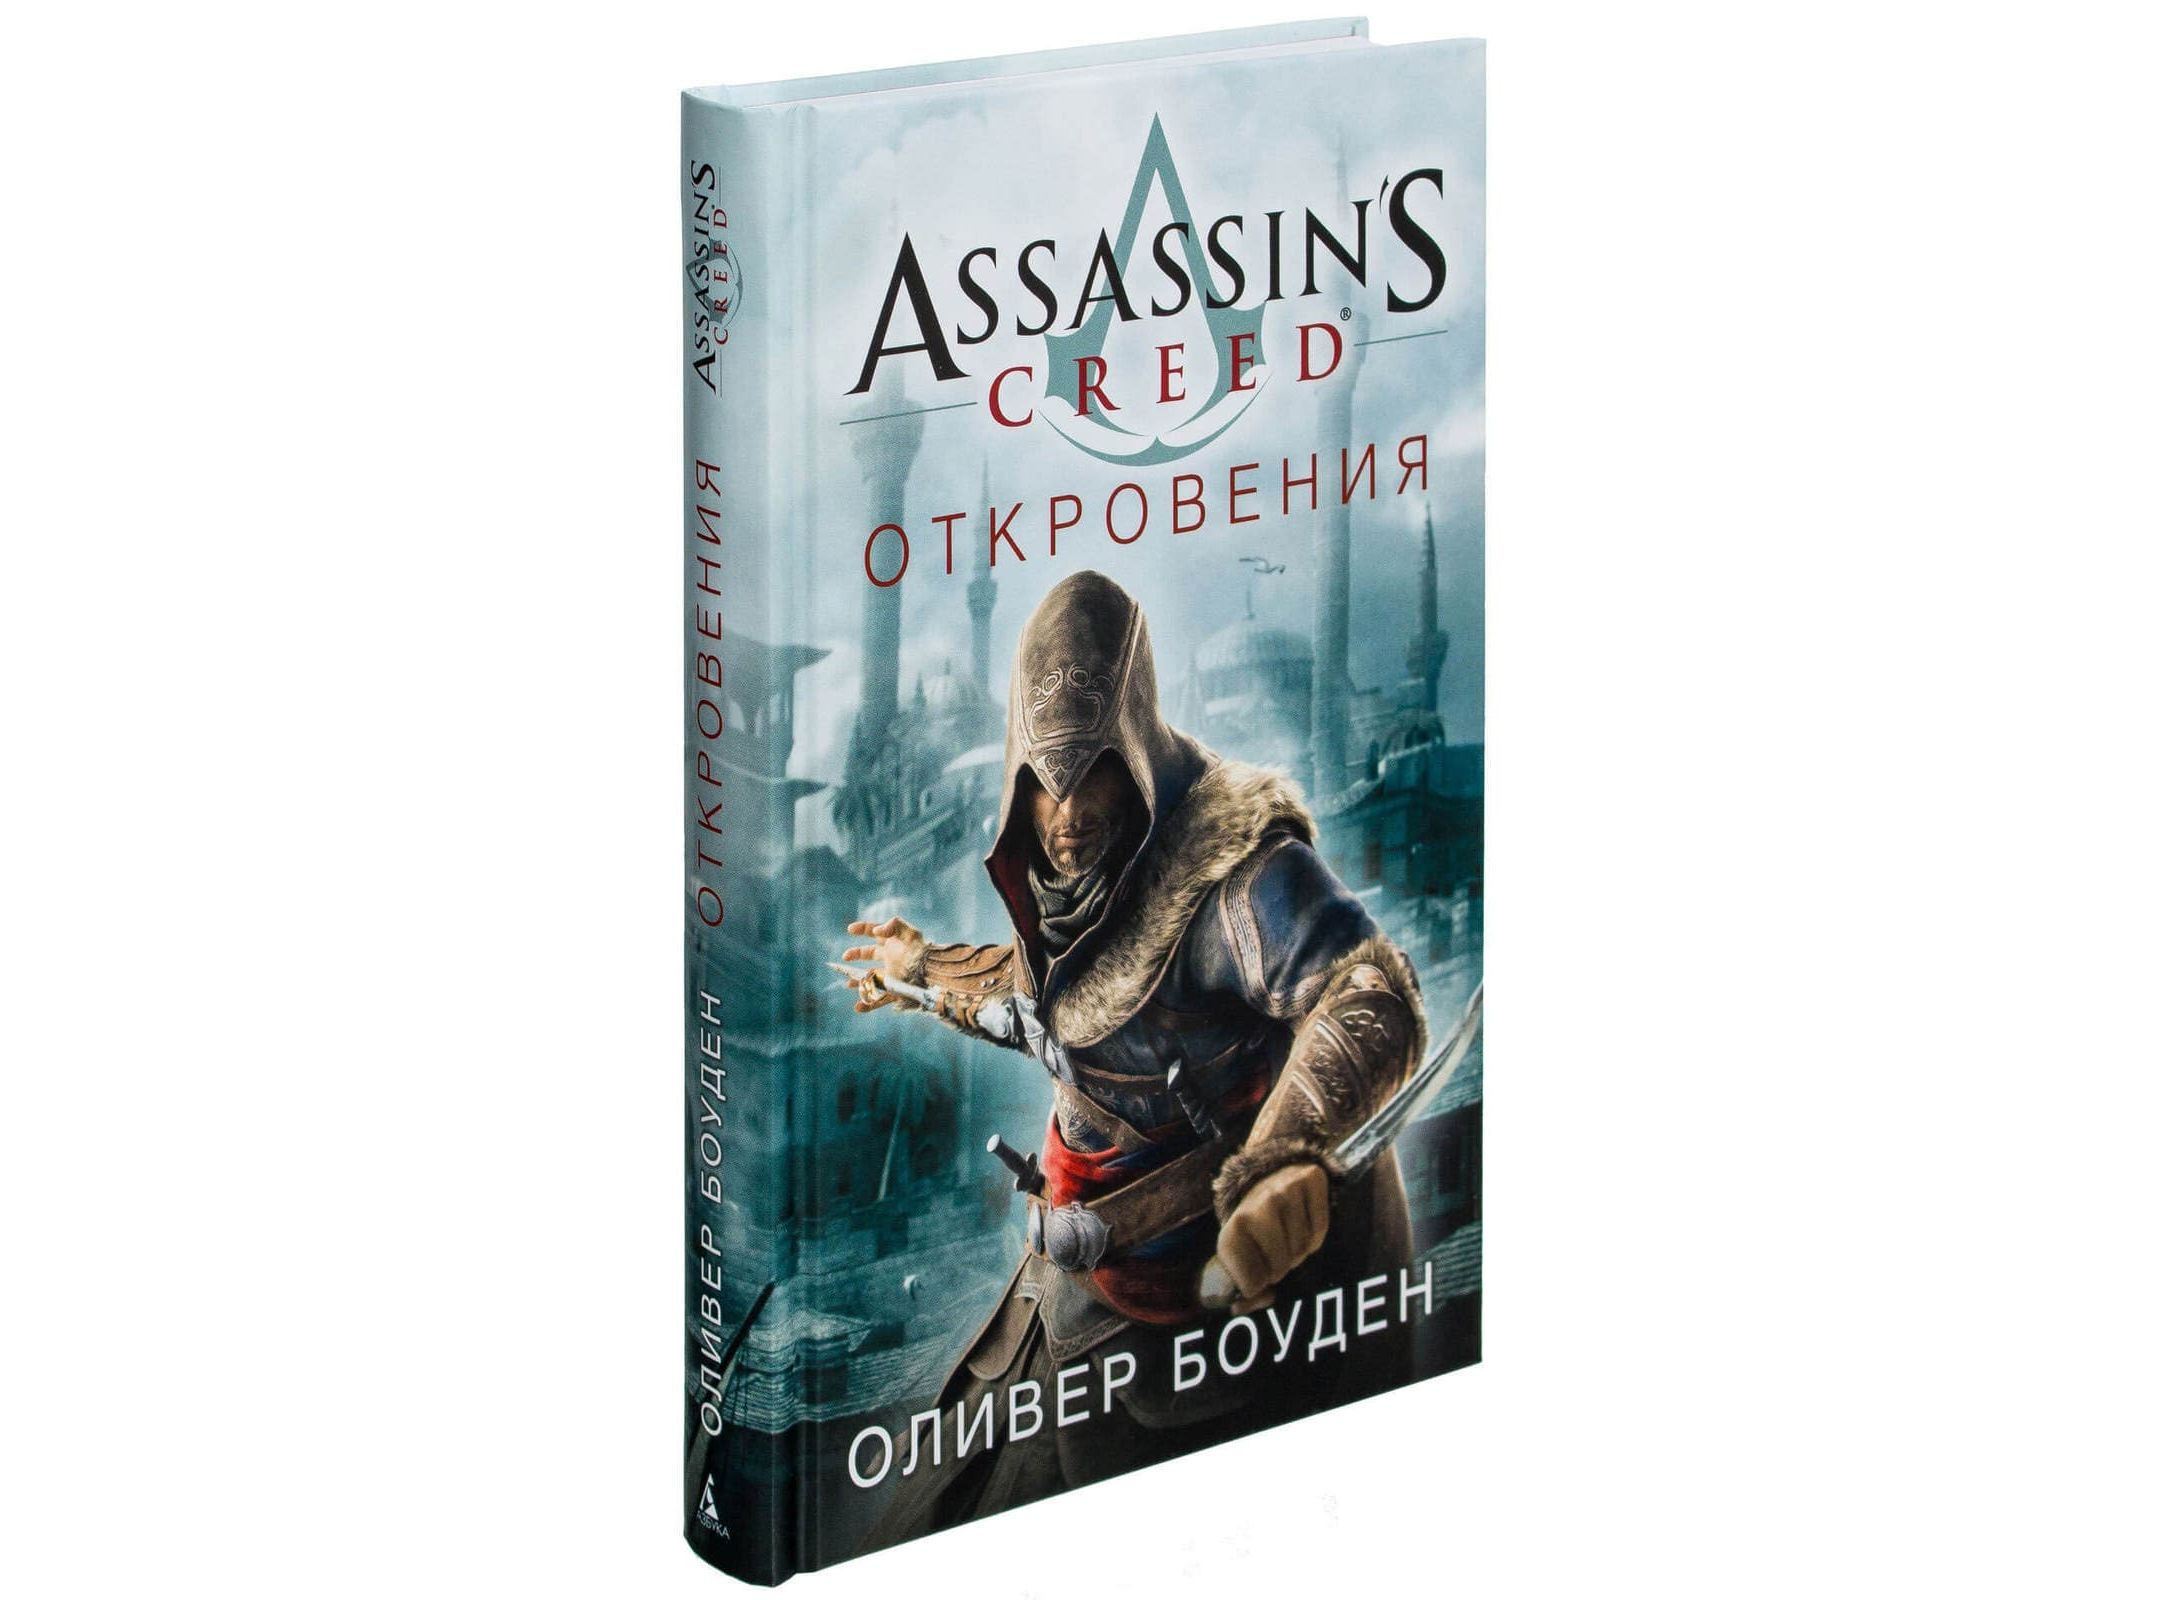 Книга мастер ассасин. Оливер Боуден Assassin’s Creed.откровения. Оливер Боуден братство. Оливер Боуден откровения. Assassin's Creed книга Боуден.